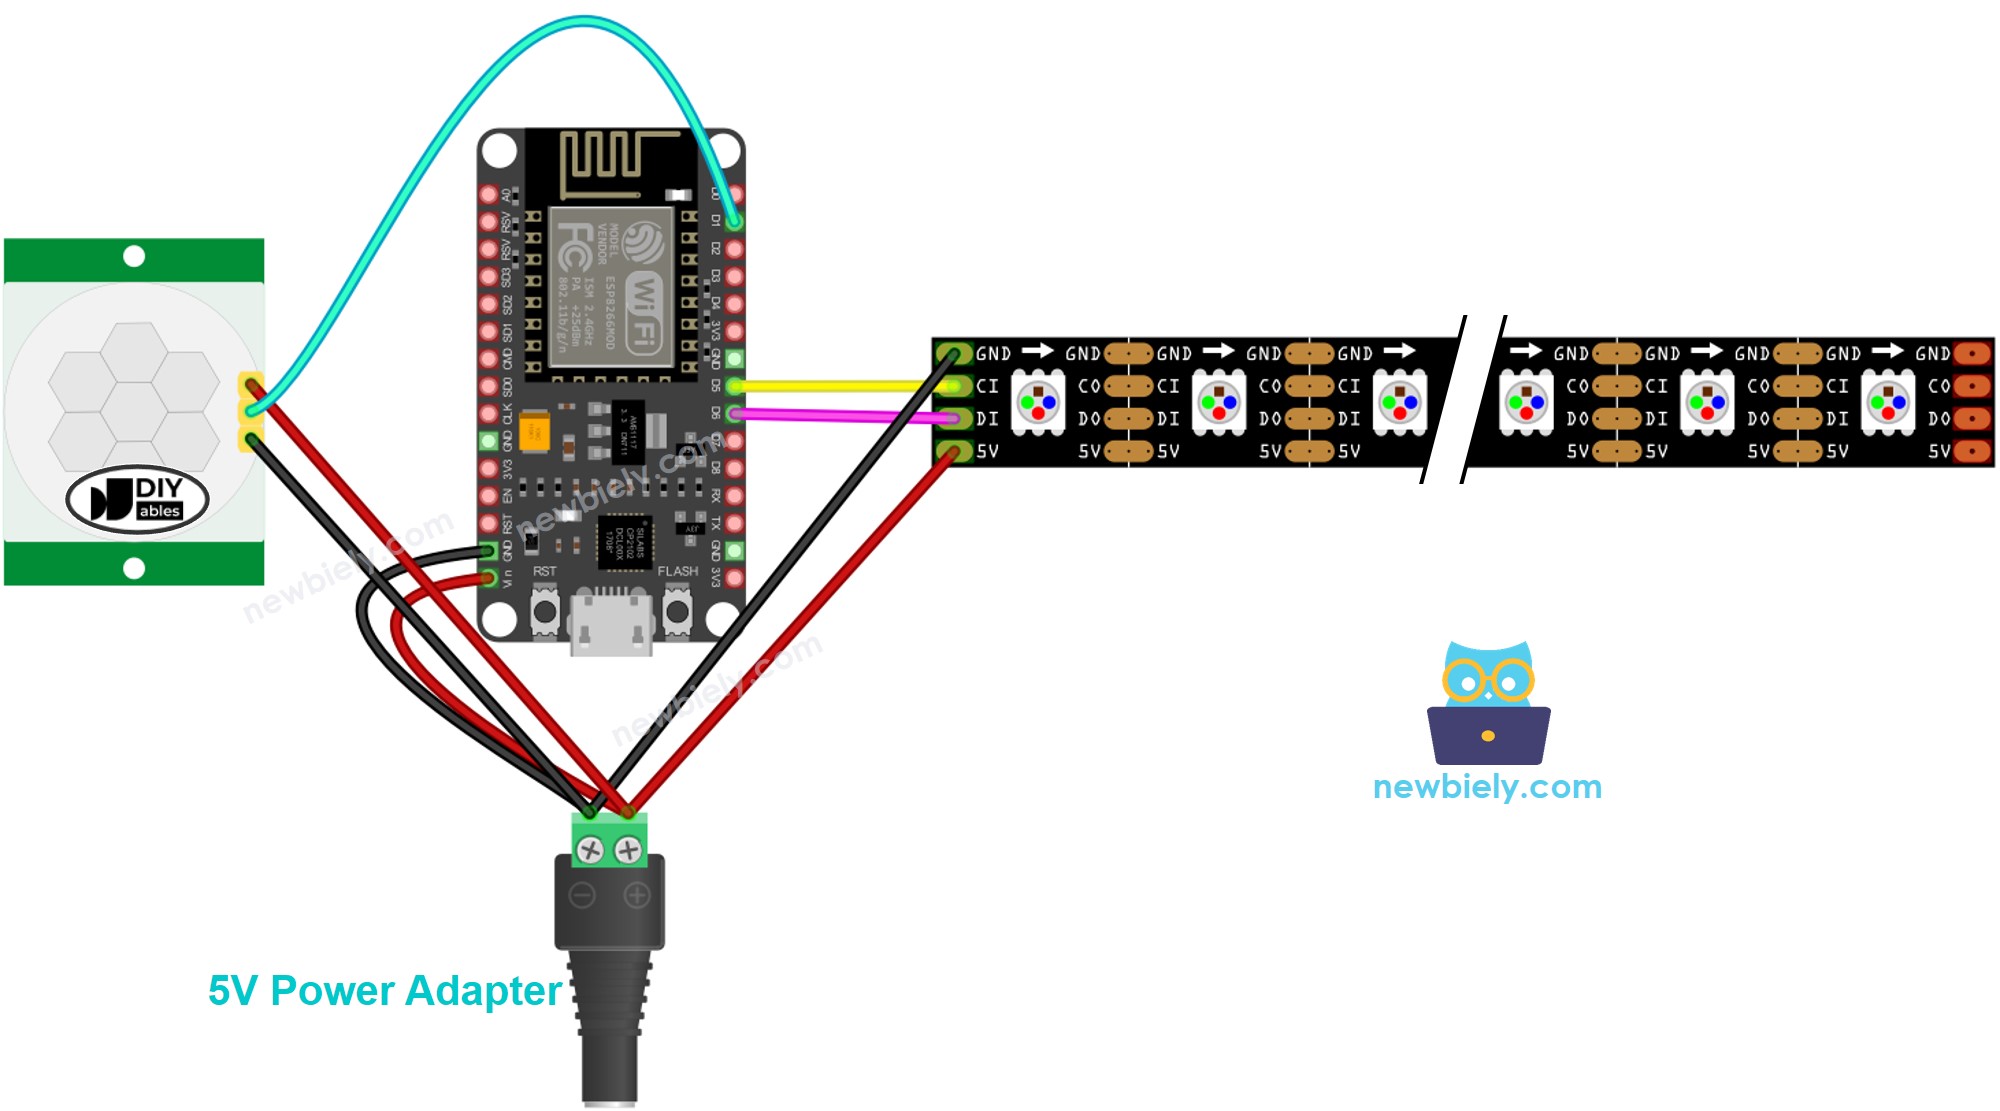 The wiring diagram between ESP8266 NodeMCU and Motion Sensor LED strip